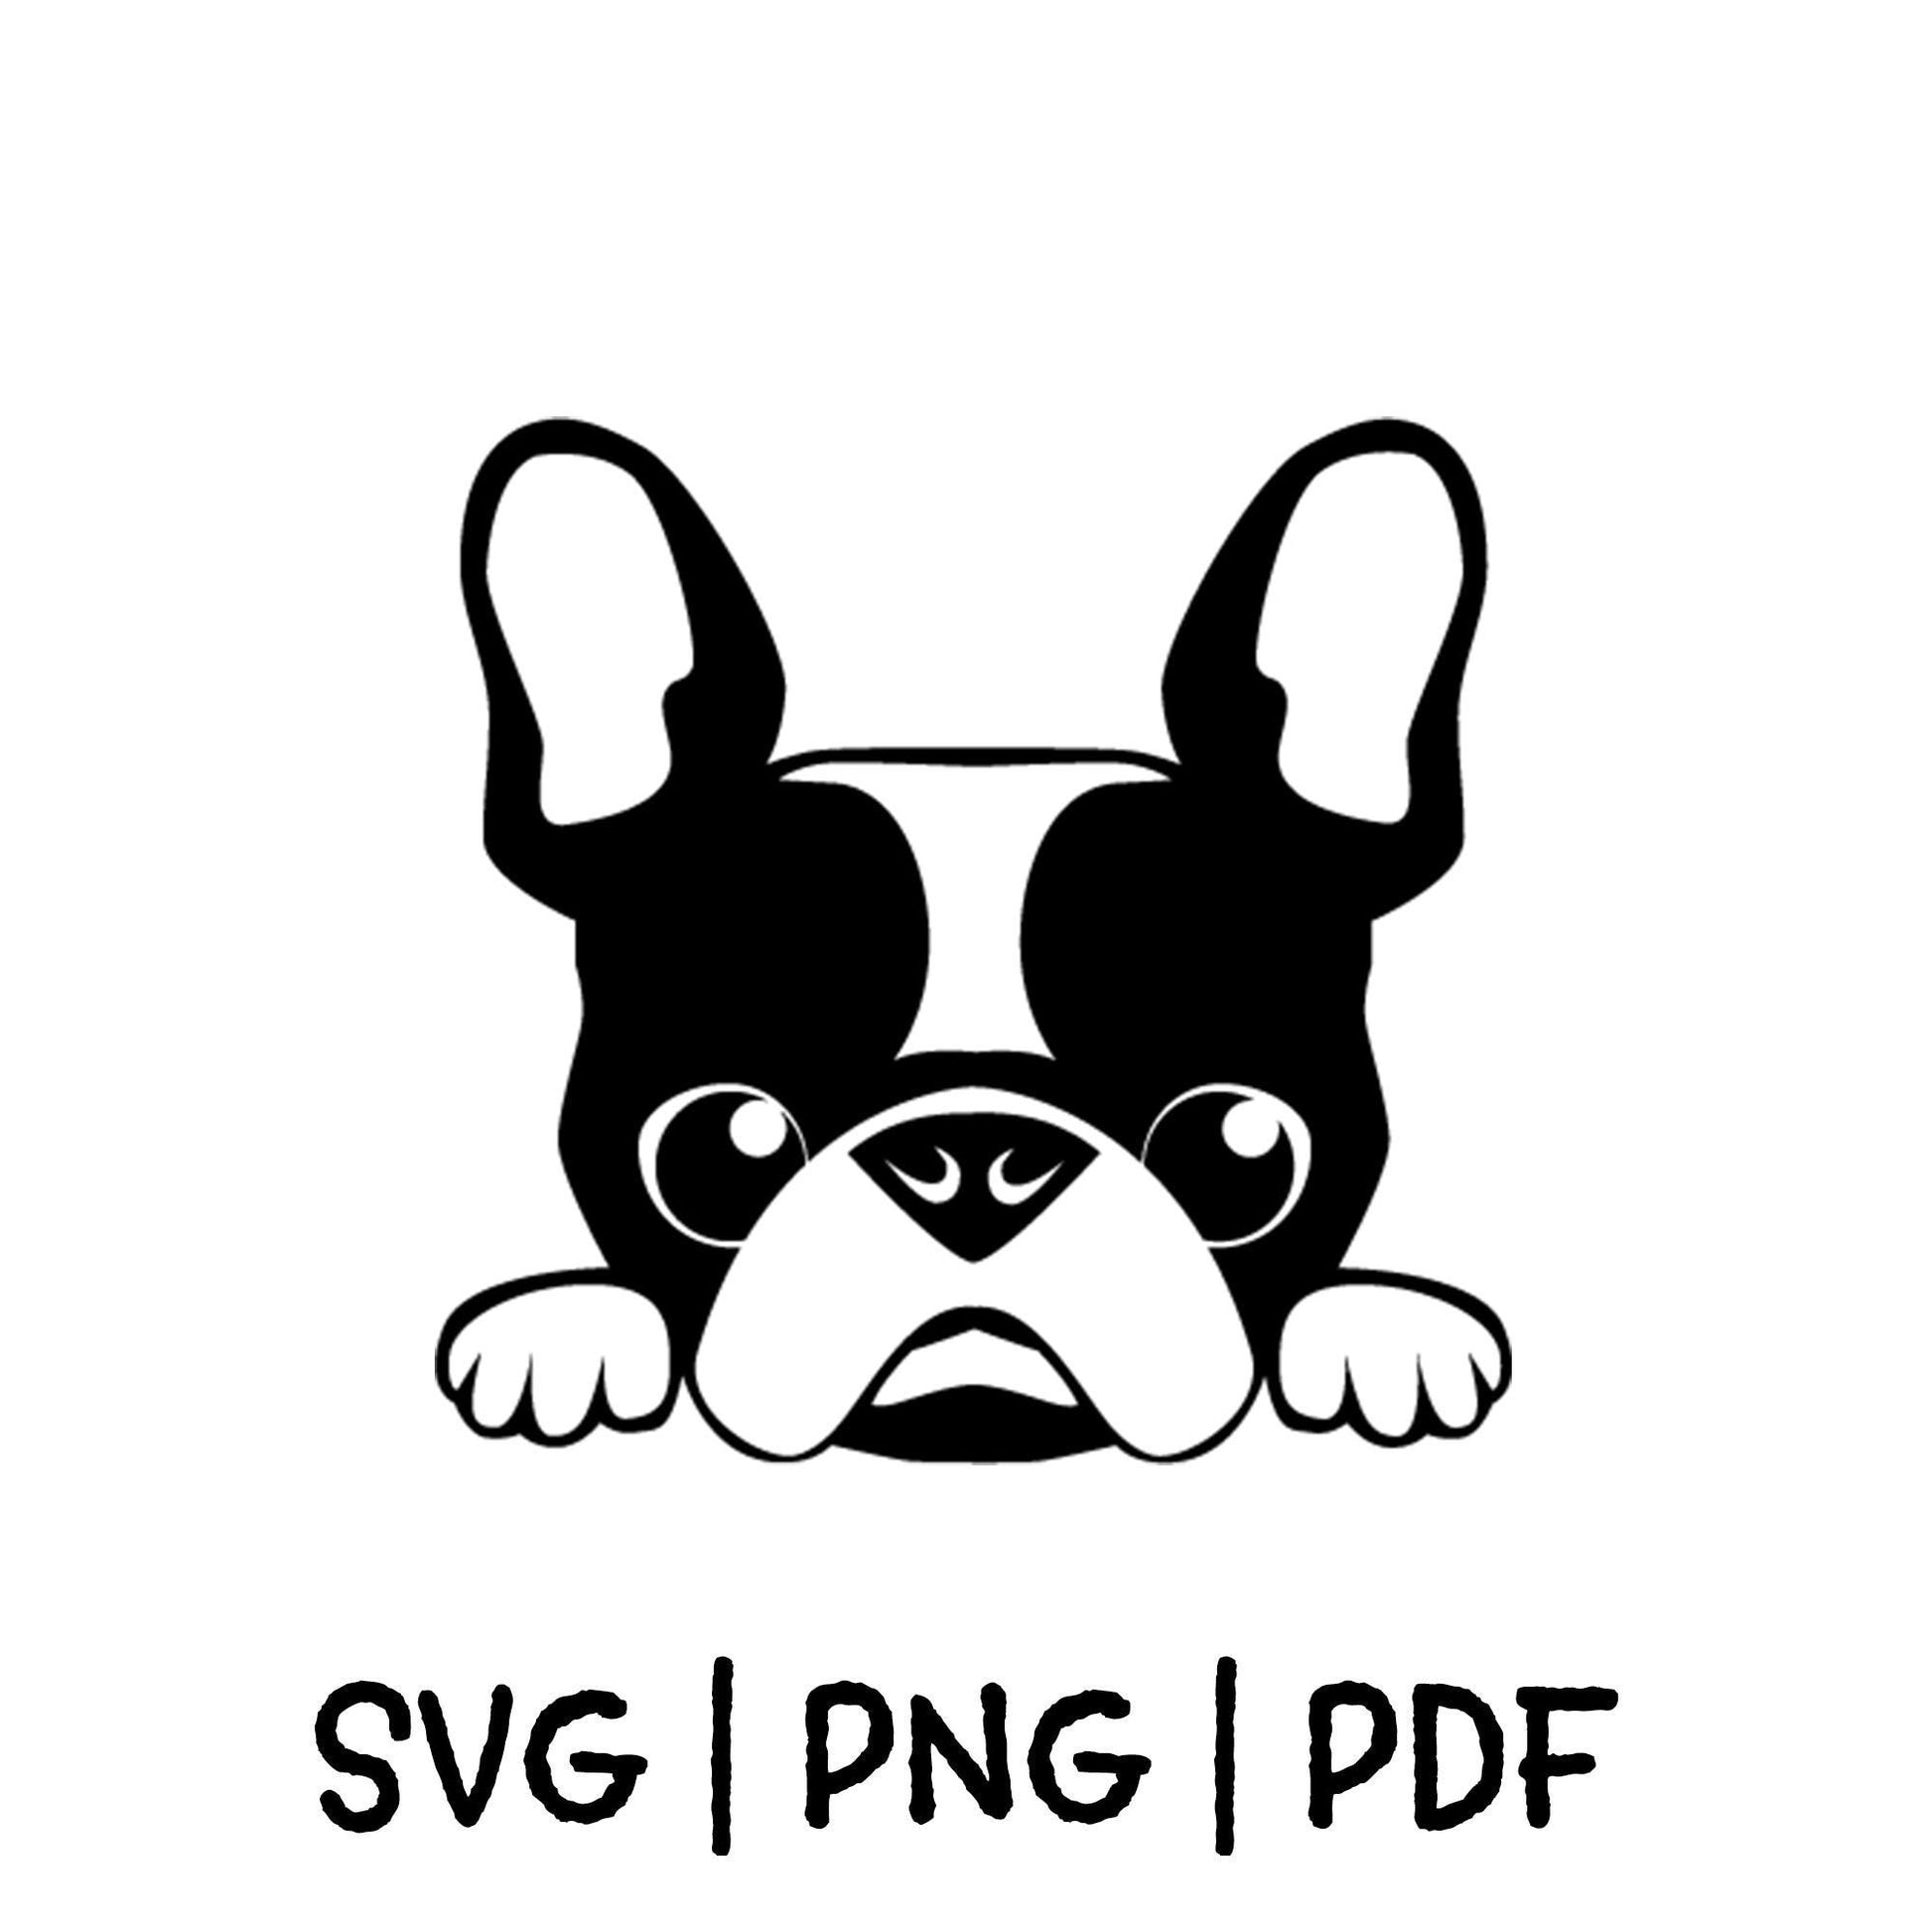 French Bulldog SVG Cut File, PNG, PDF, Cute Dog Cutting File, Cricut, Silhouette, Vector Image, Clipart, SVG Cut Files, Digital Artwork